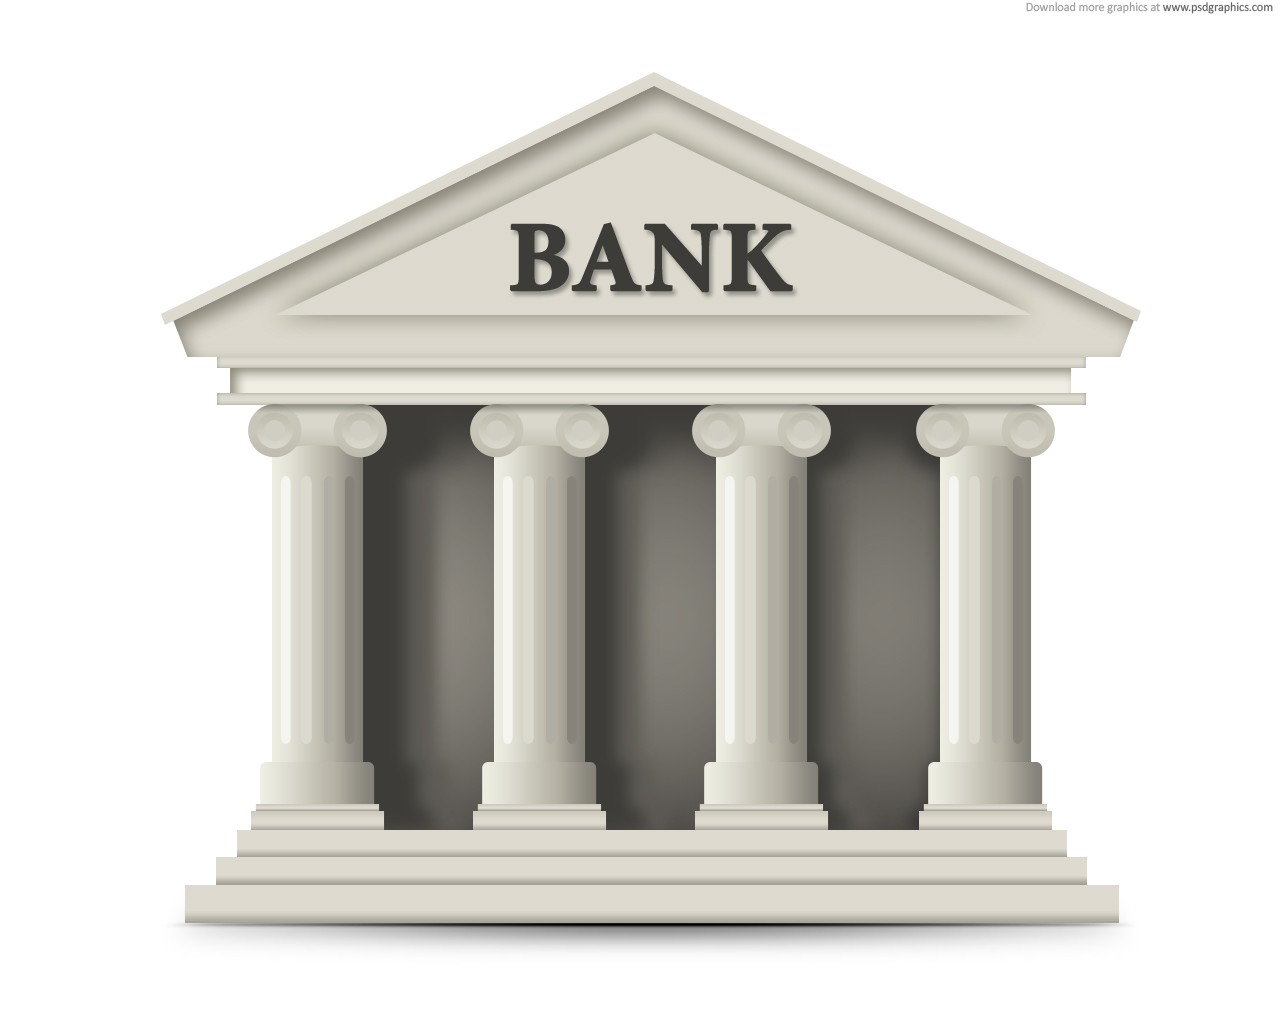 Intermediate bank. Банк. Здание банка. Банк рисунок. Здание банка на белом фоне.